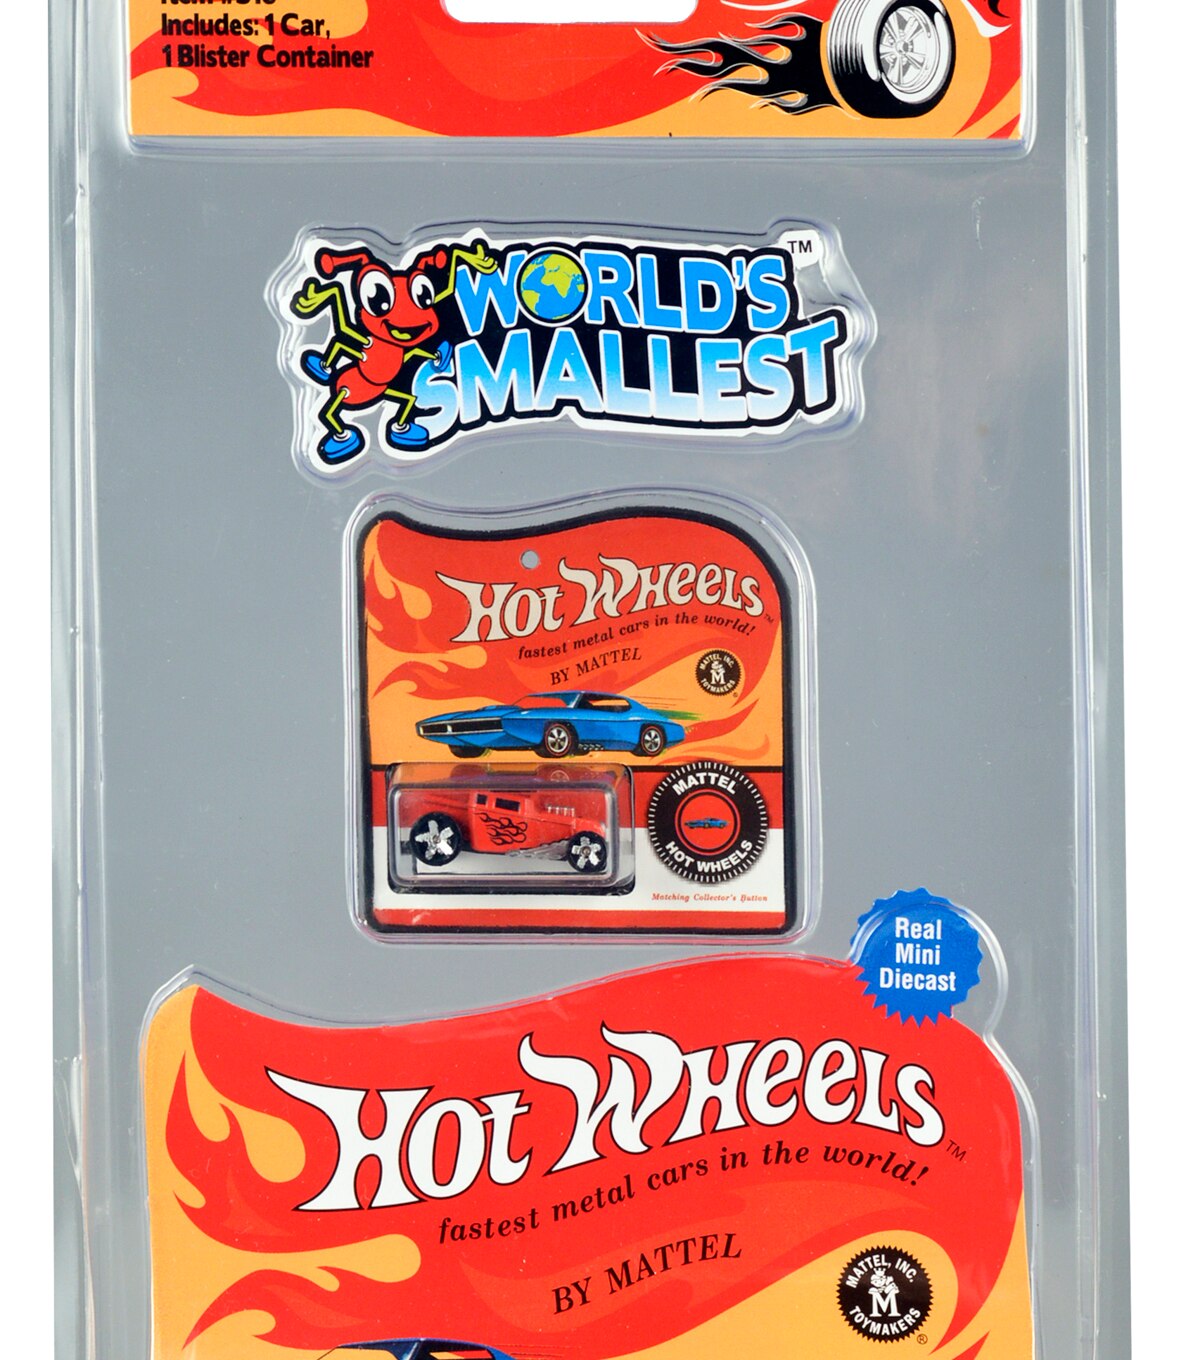 hot wheels smallest cars